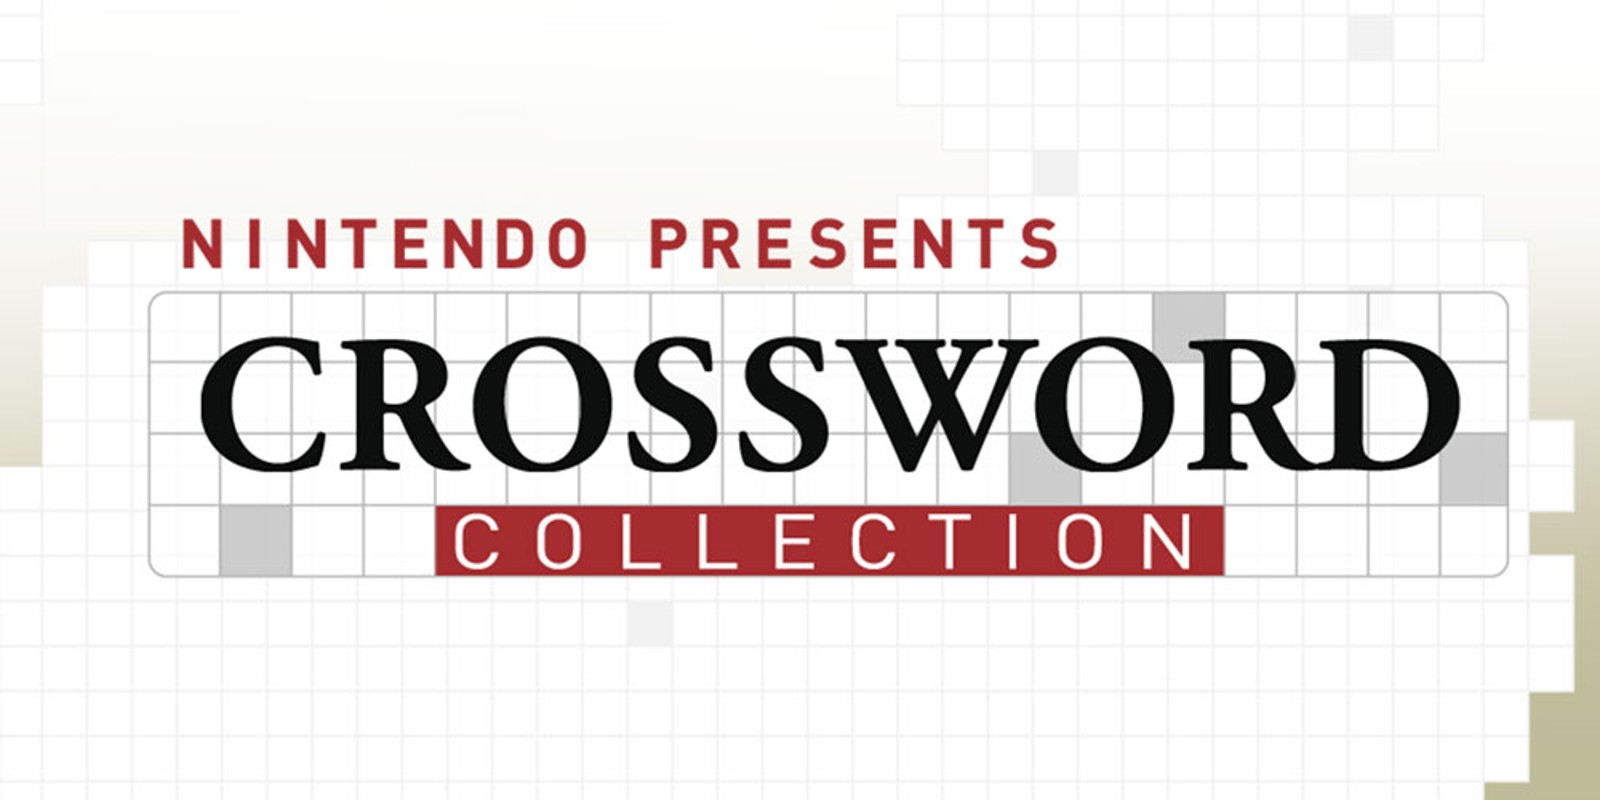 Nintendo presents: Crossword Collection